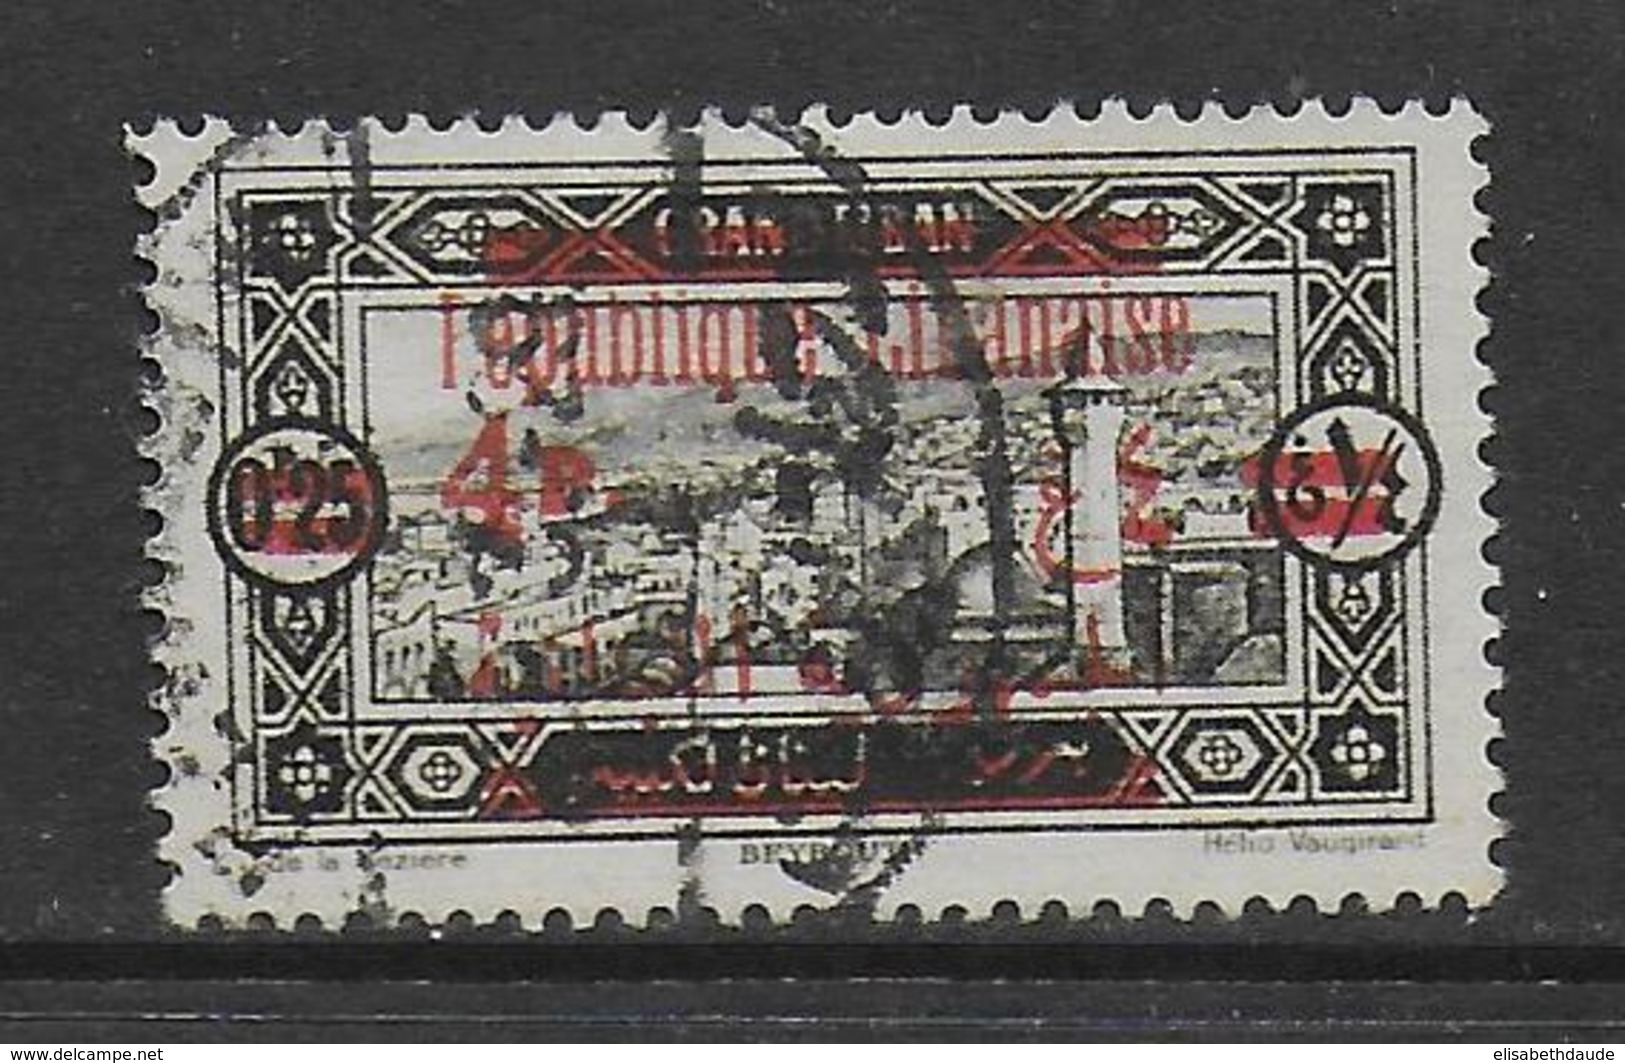 GRAND-LIBAN - 1928 - YVERT N°119 SURCHARGE RECTO-VERSO OBLITERE - COTE = 80 EUR. - Gebraucht